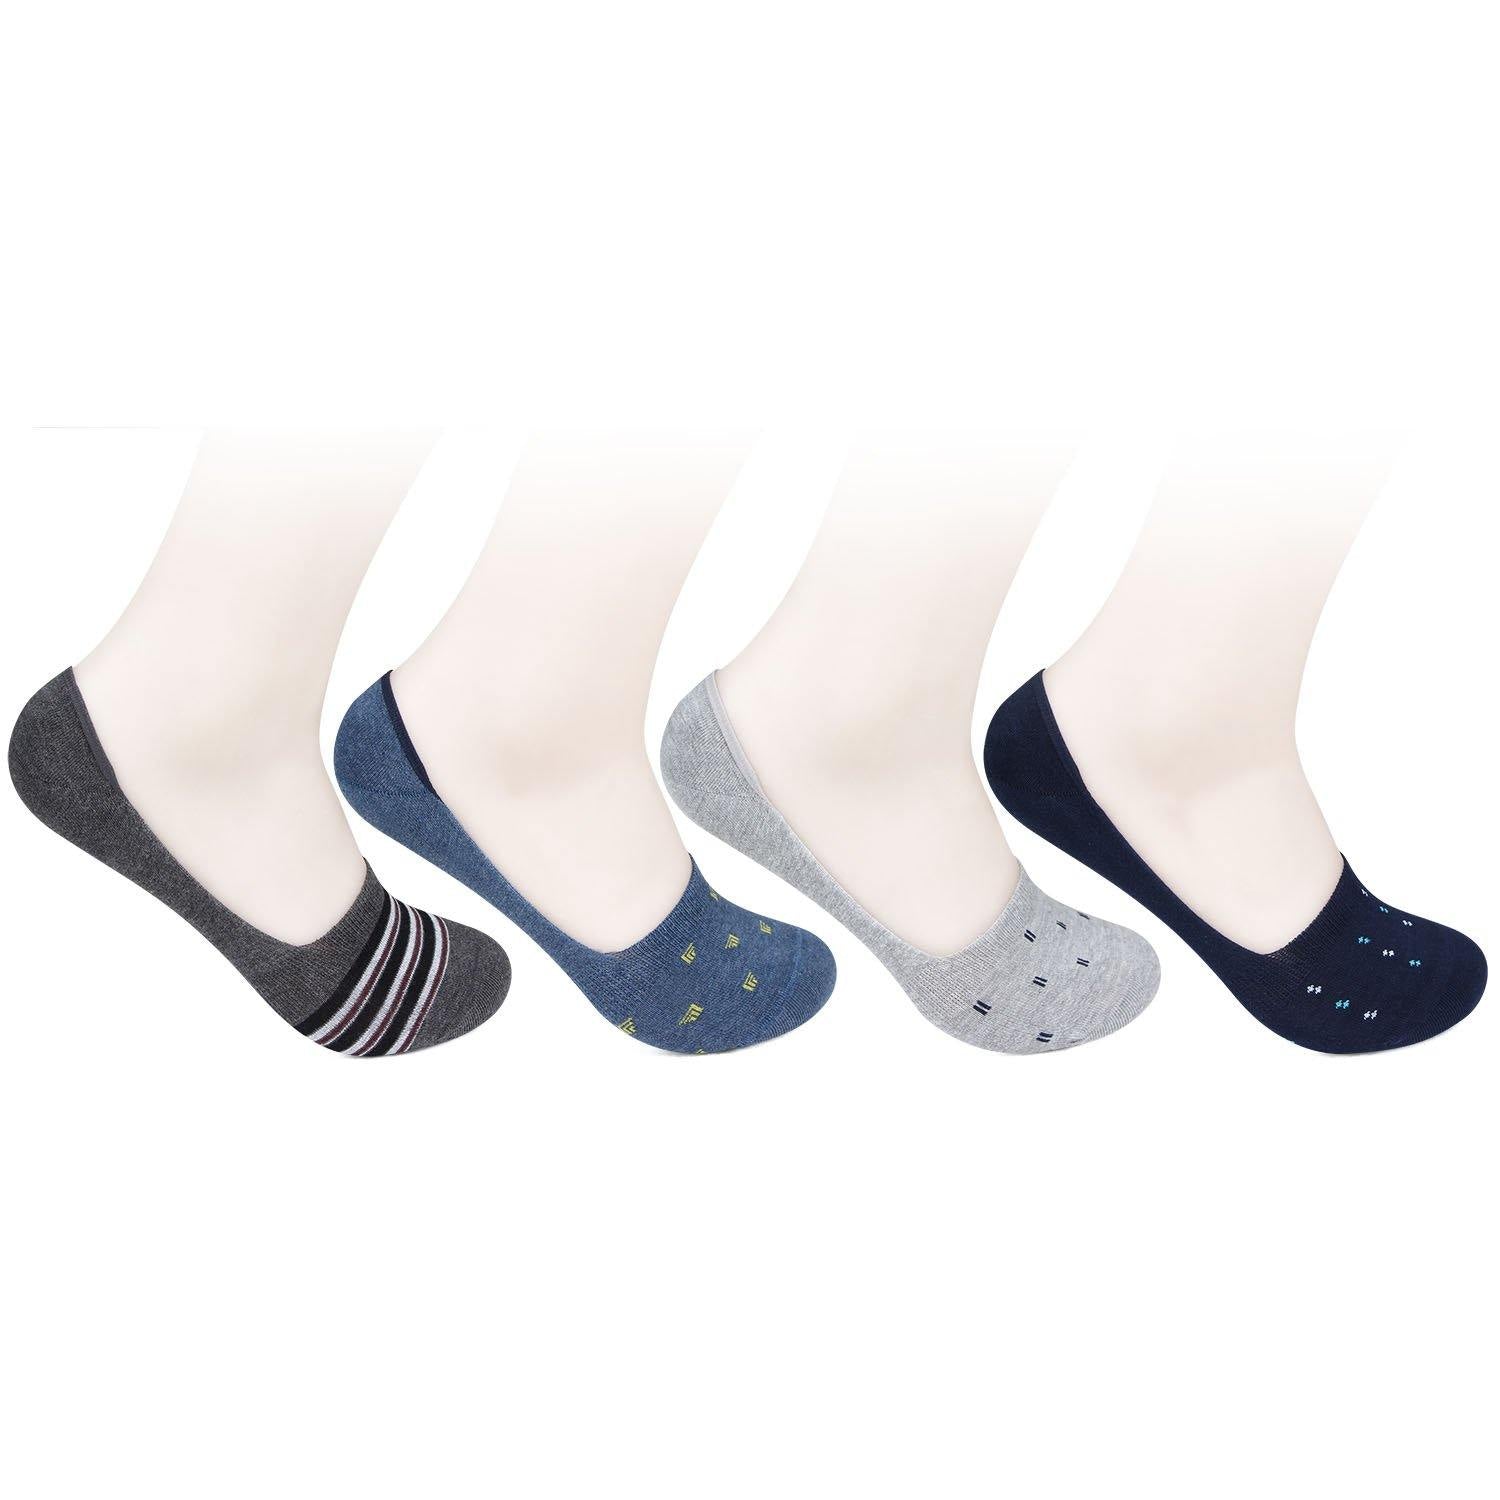 Loafer Socks for Men Online – Buy Cotton No Show Socks in India ...